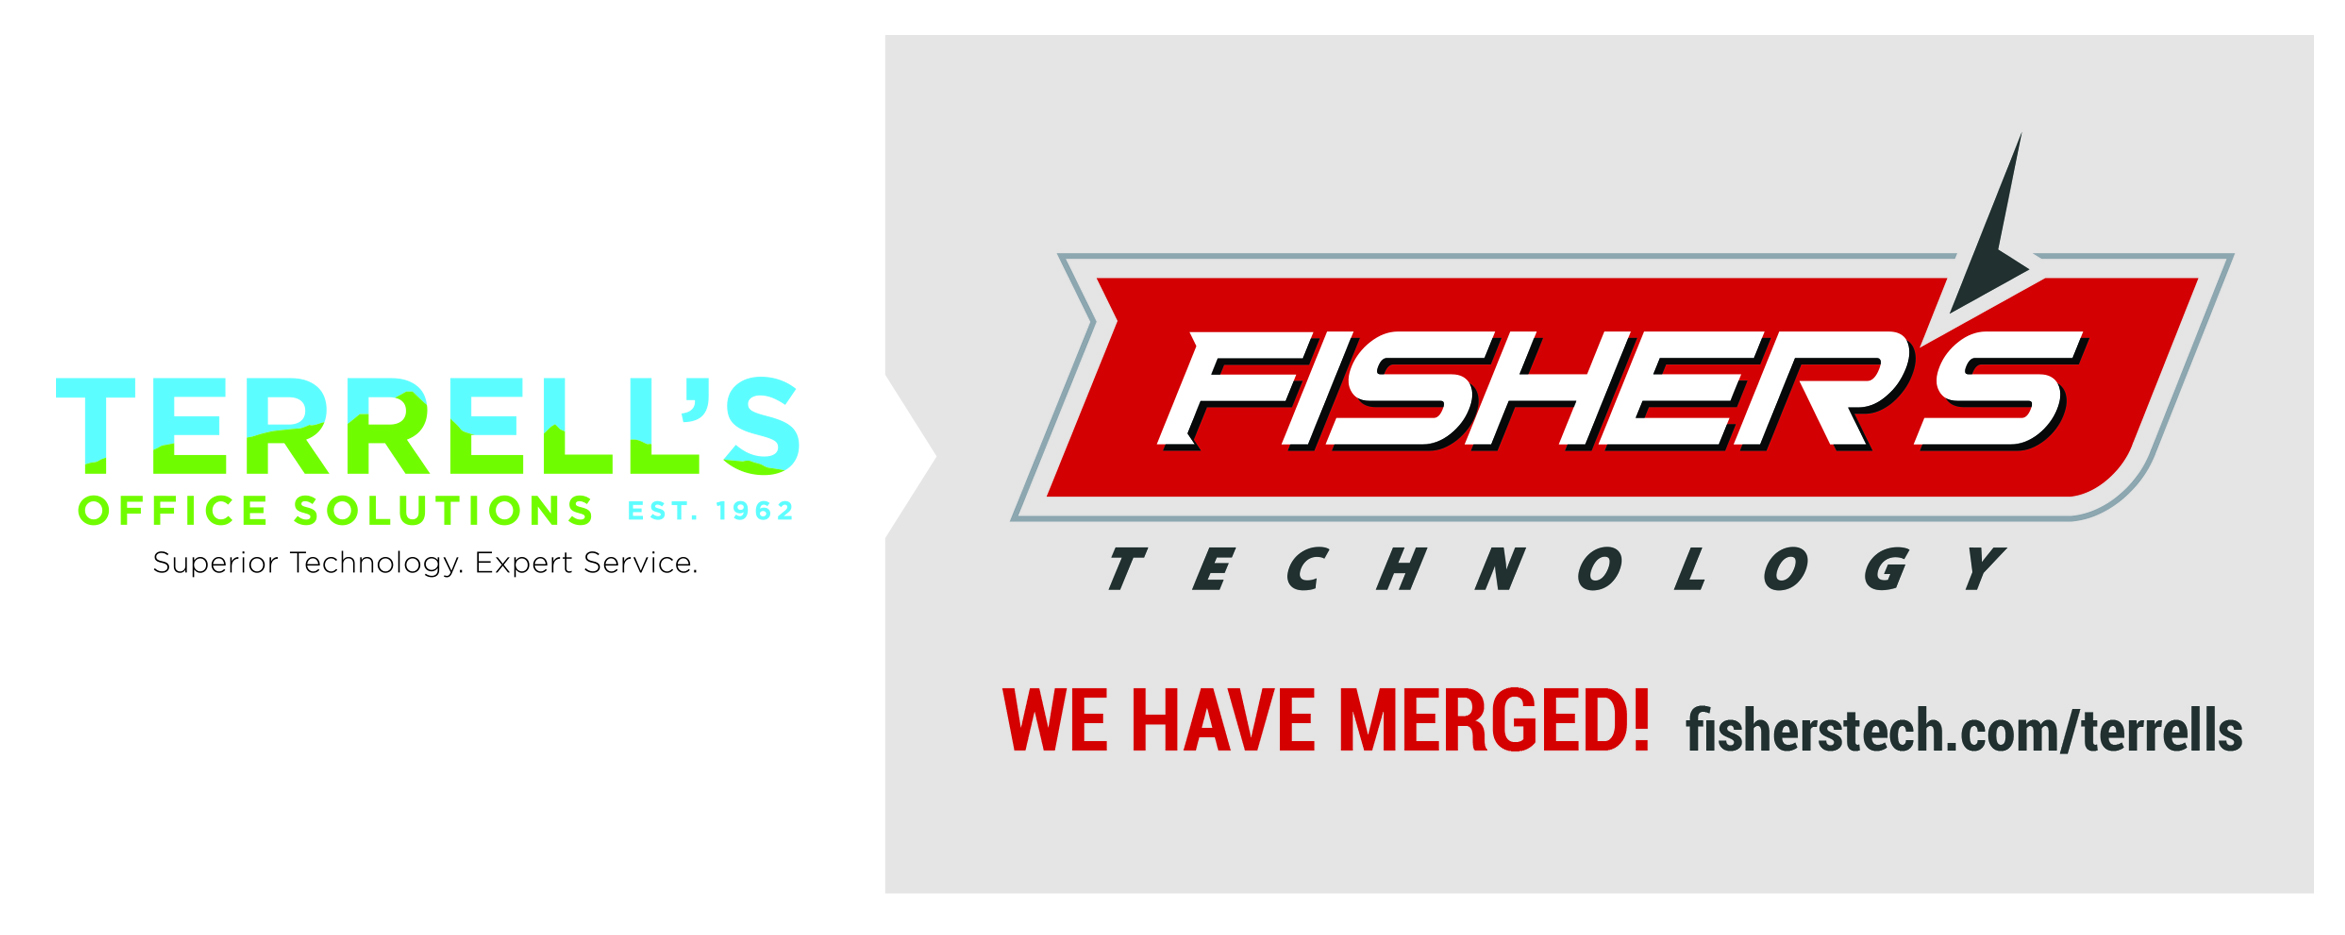 fishers tech terrell's logo